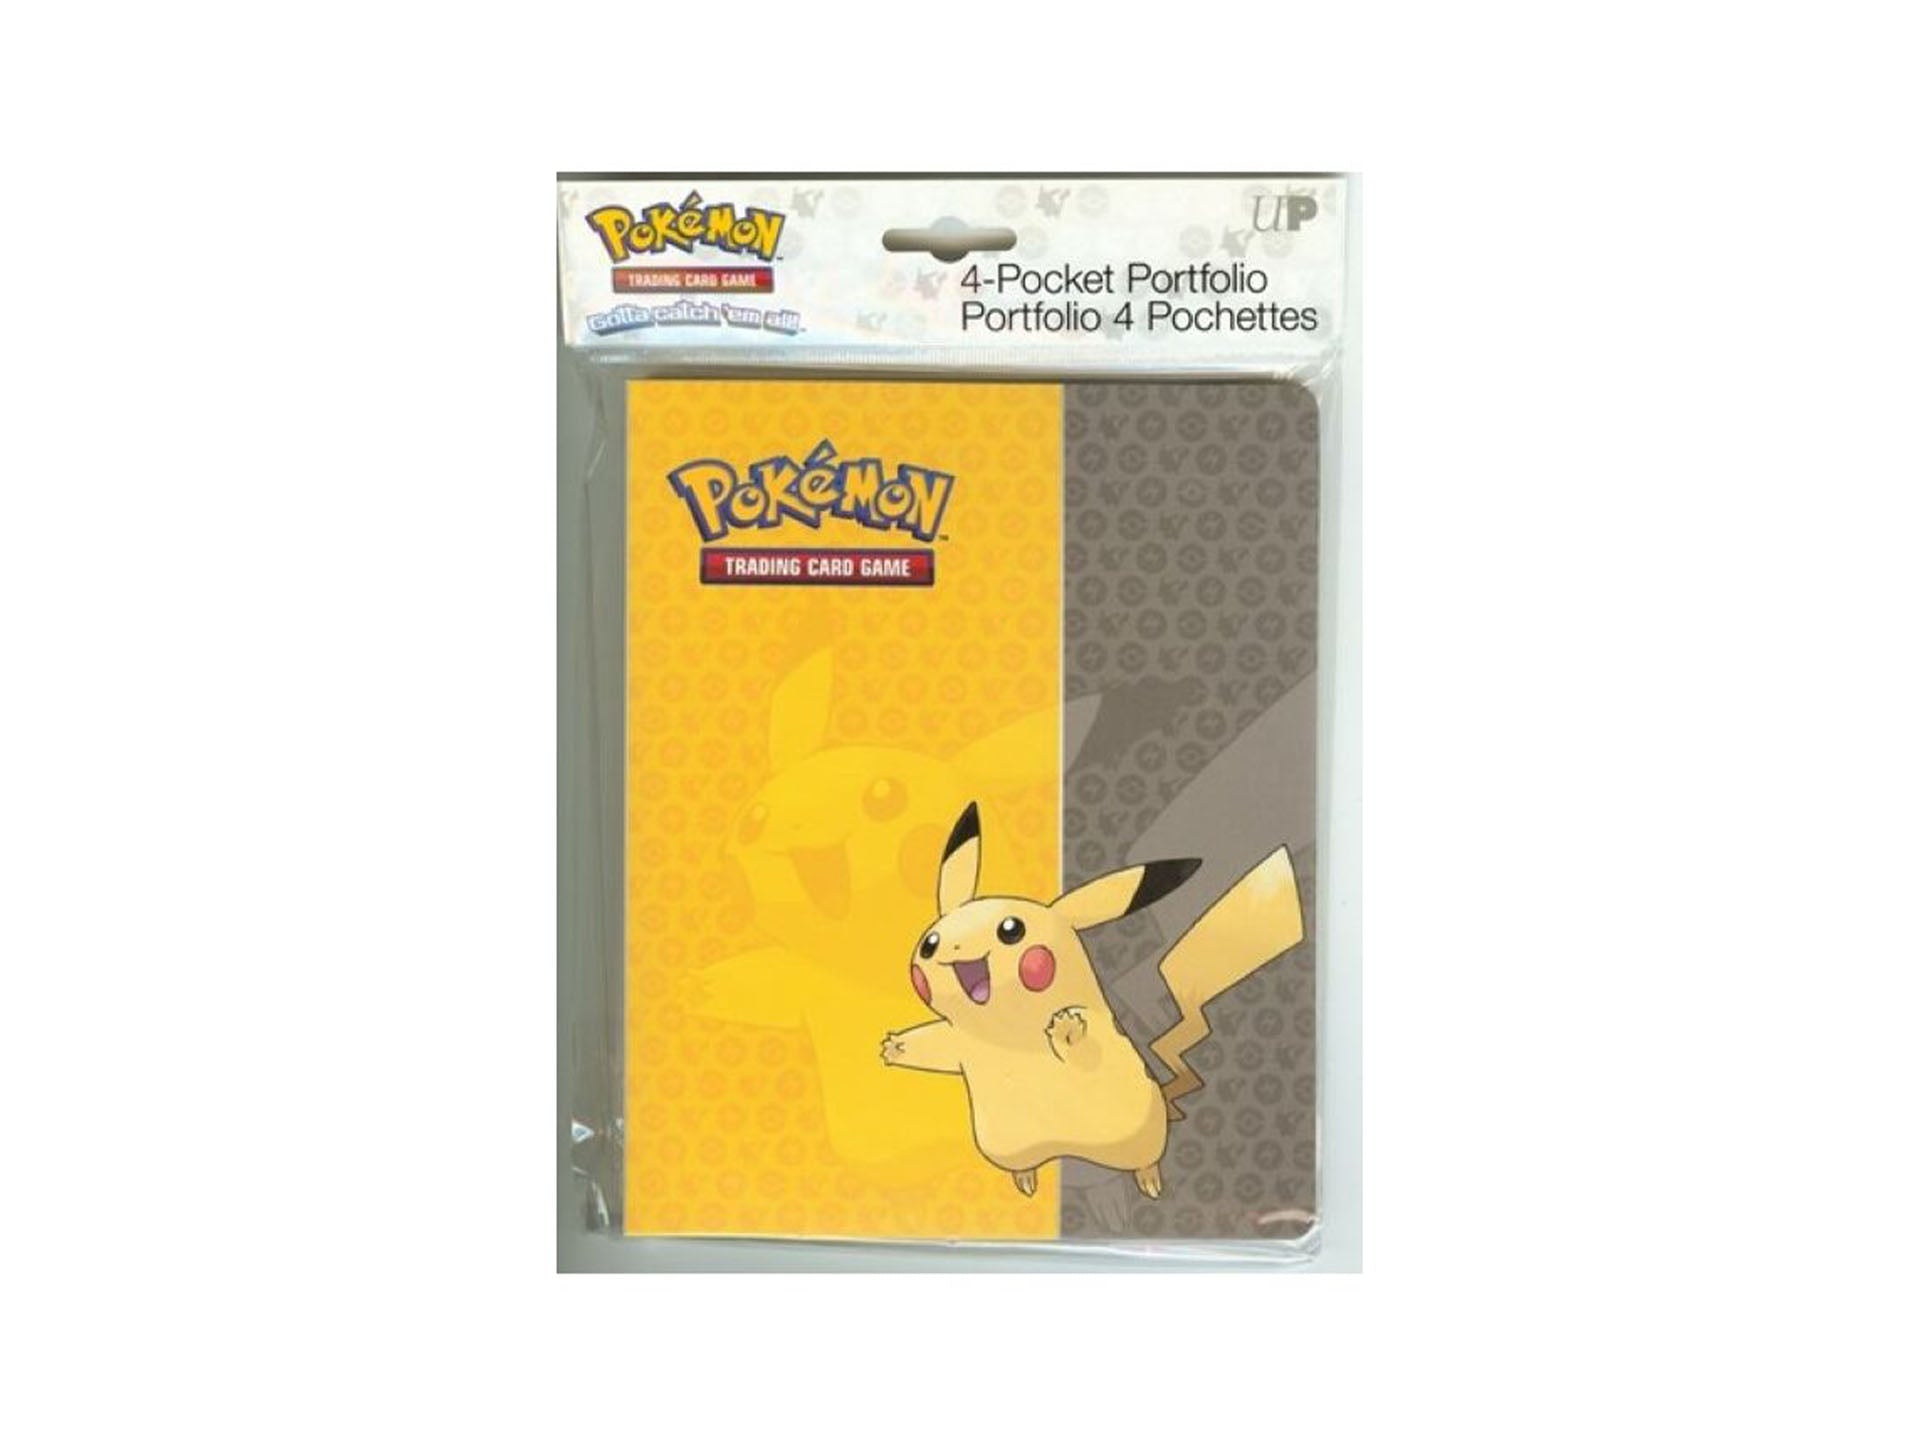 Pokemon Pikachu verzamelmap 4-pocket